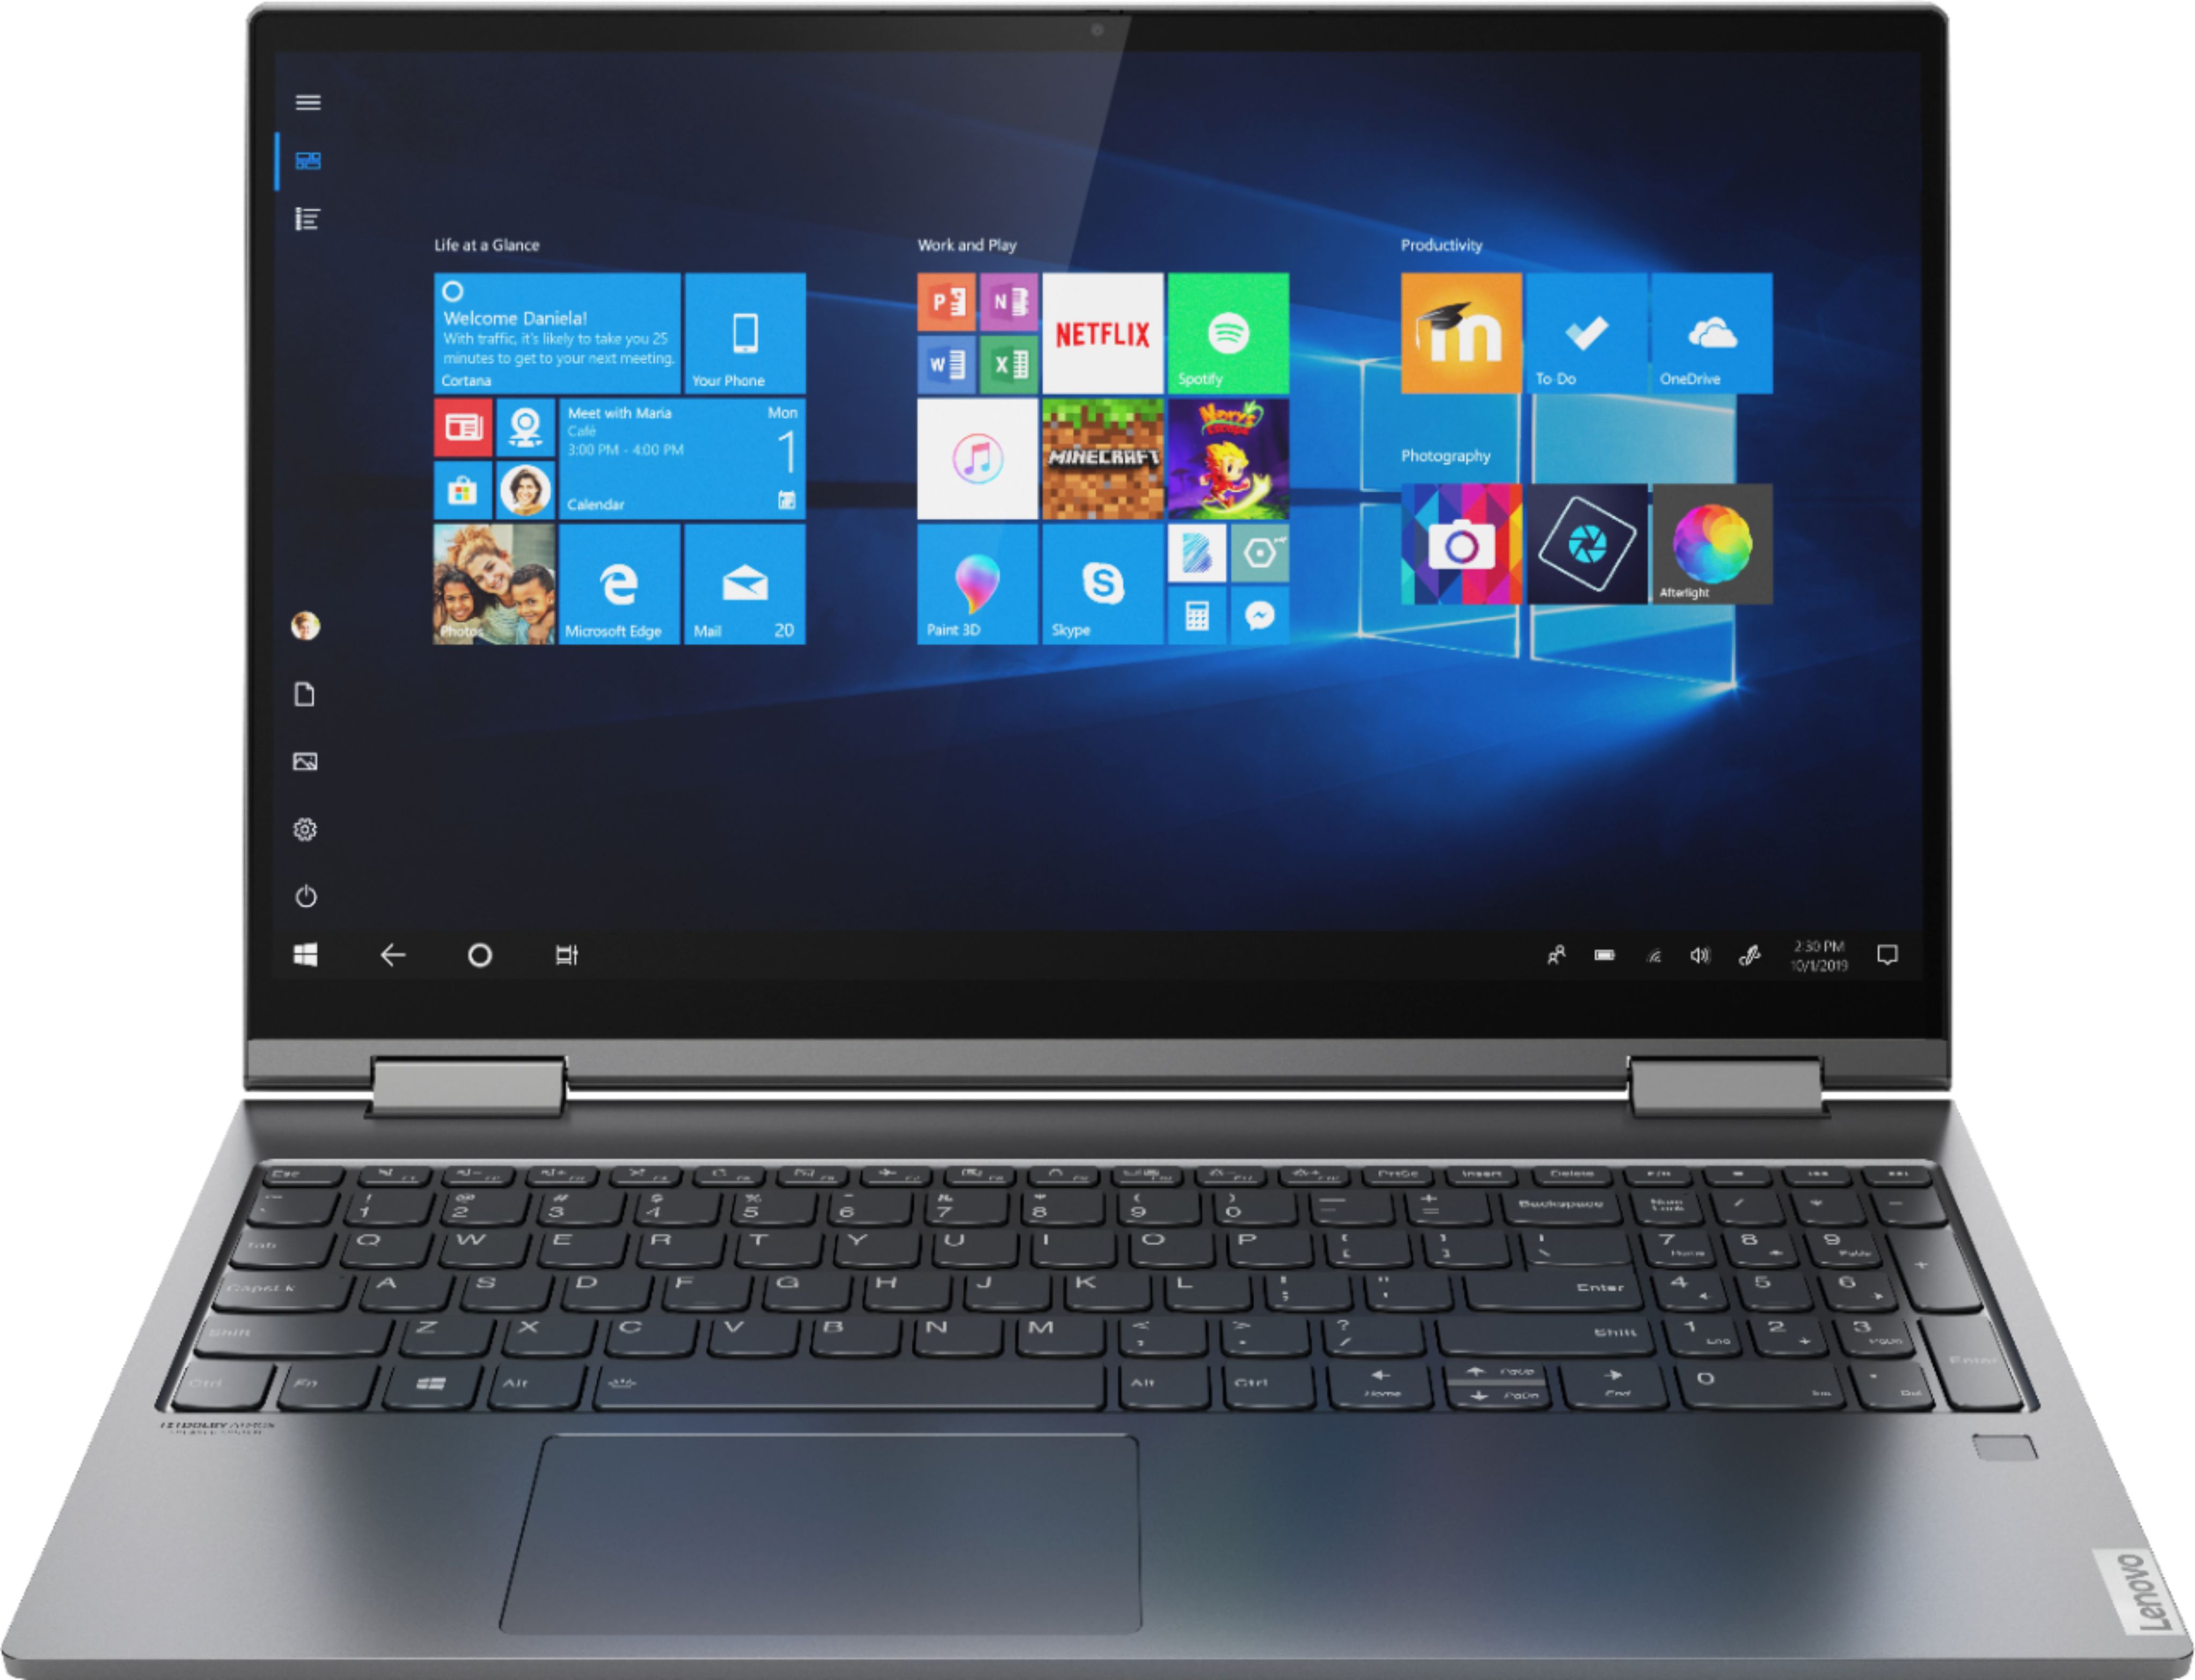 Lenovo Yoga C740 2-in-1 15.6" Touch Screen Laptop - Intel Core i5 - 8GB Memory - 512GB SSD + 32GB Optane $649